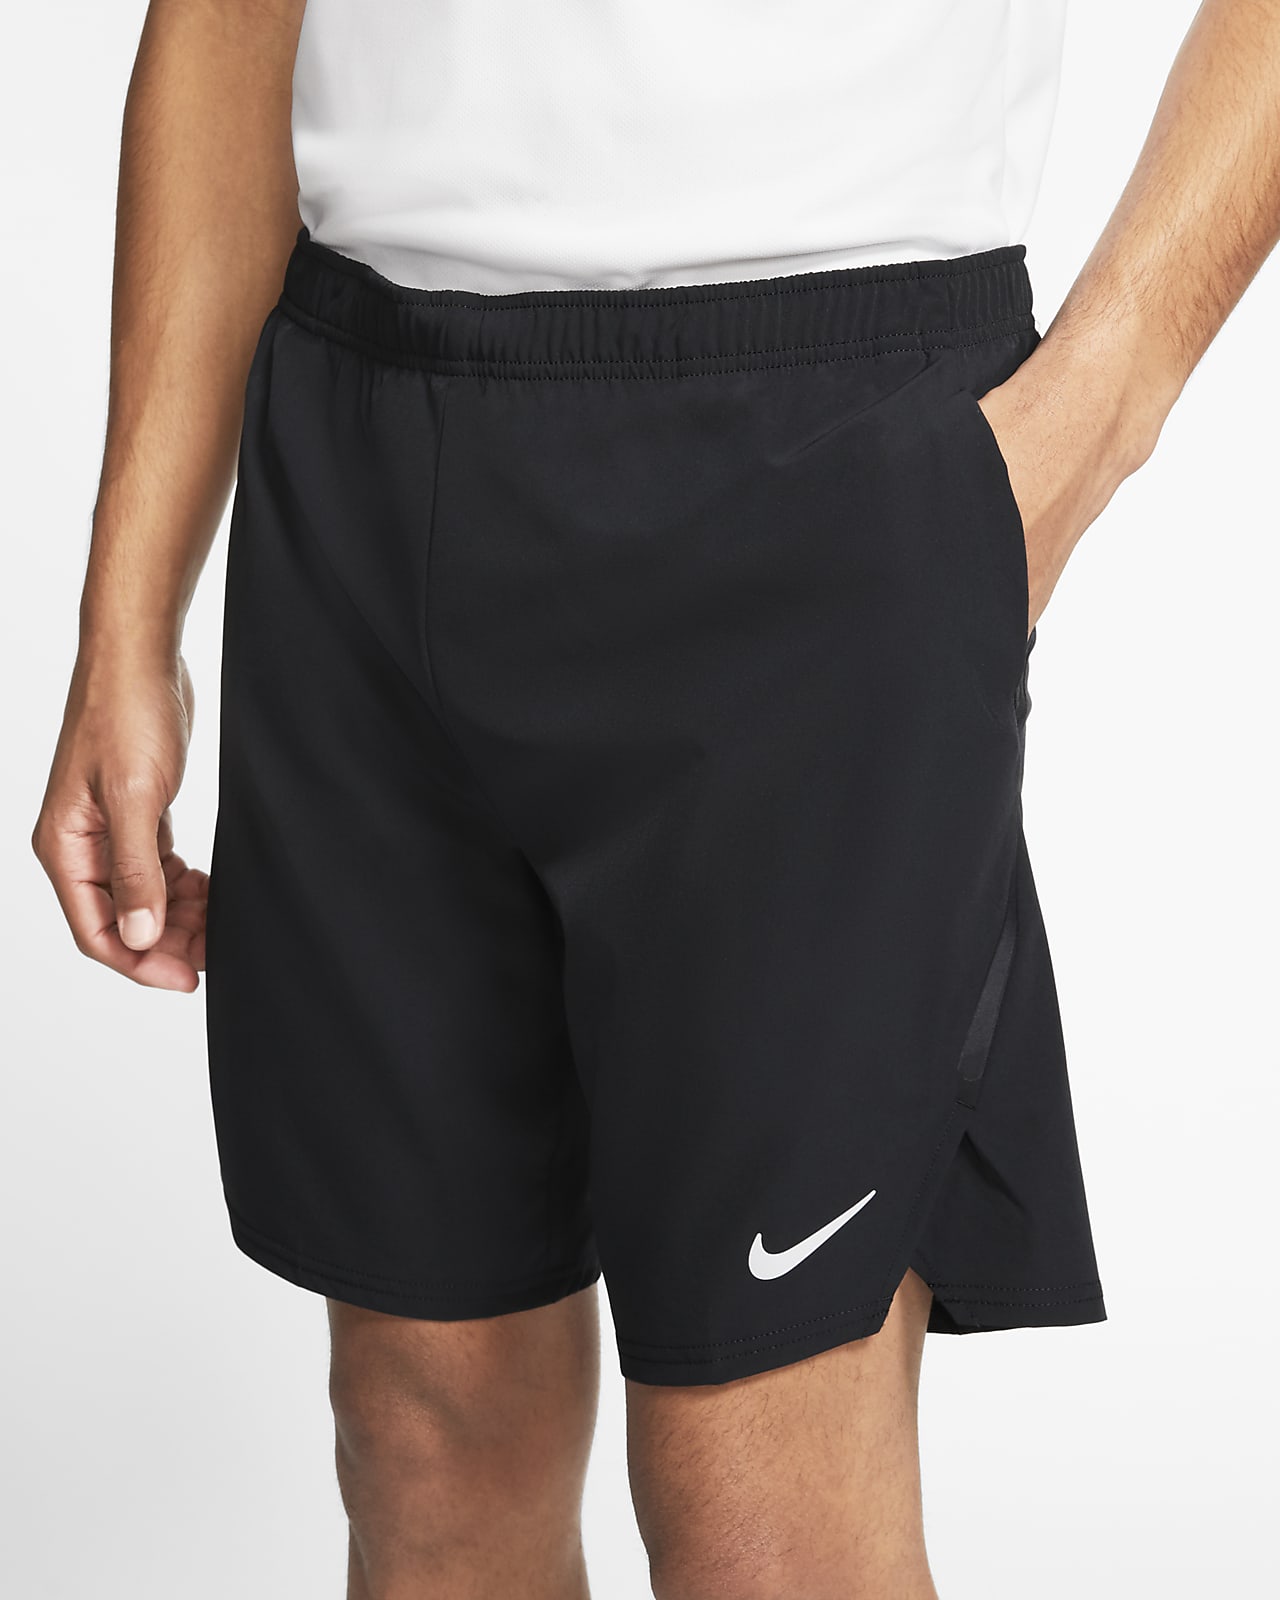 https://static.nike.com/a/images/t_PDP_1280_v1/f_auto,q_auto:eco/fcz0clpr5so4jjxxes4u/nikecourt-flex-ace-tennis-shorts-jnTpomr4.png